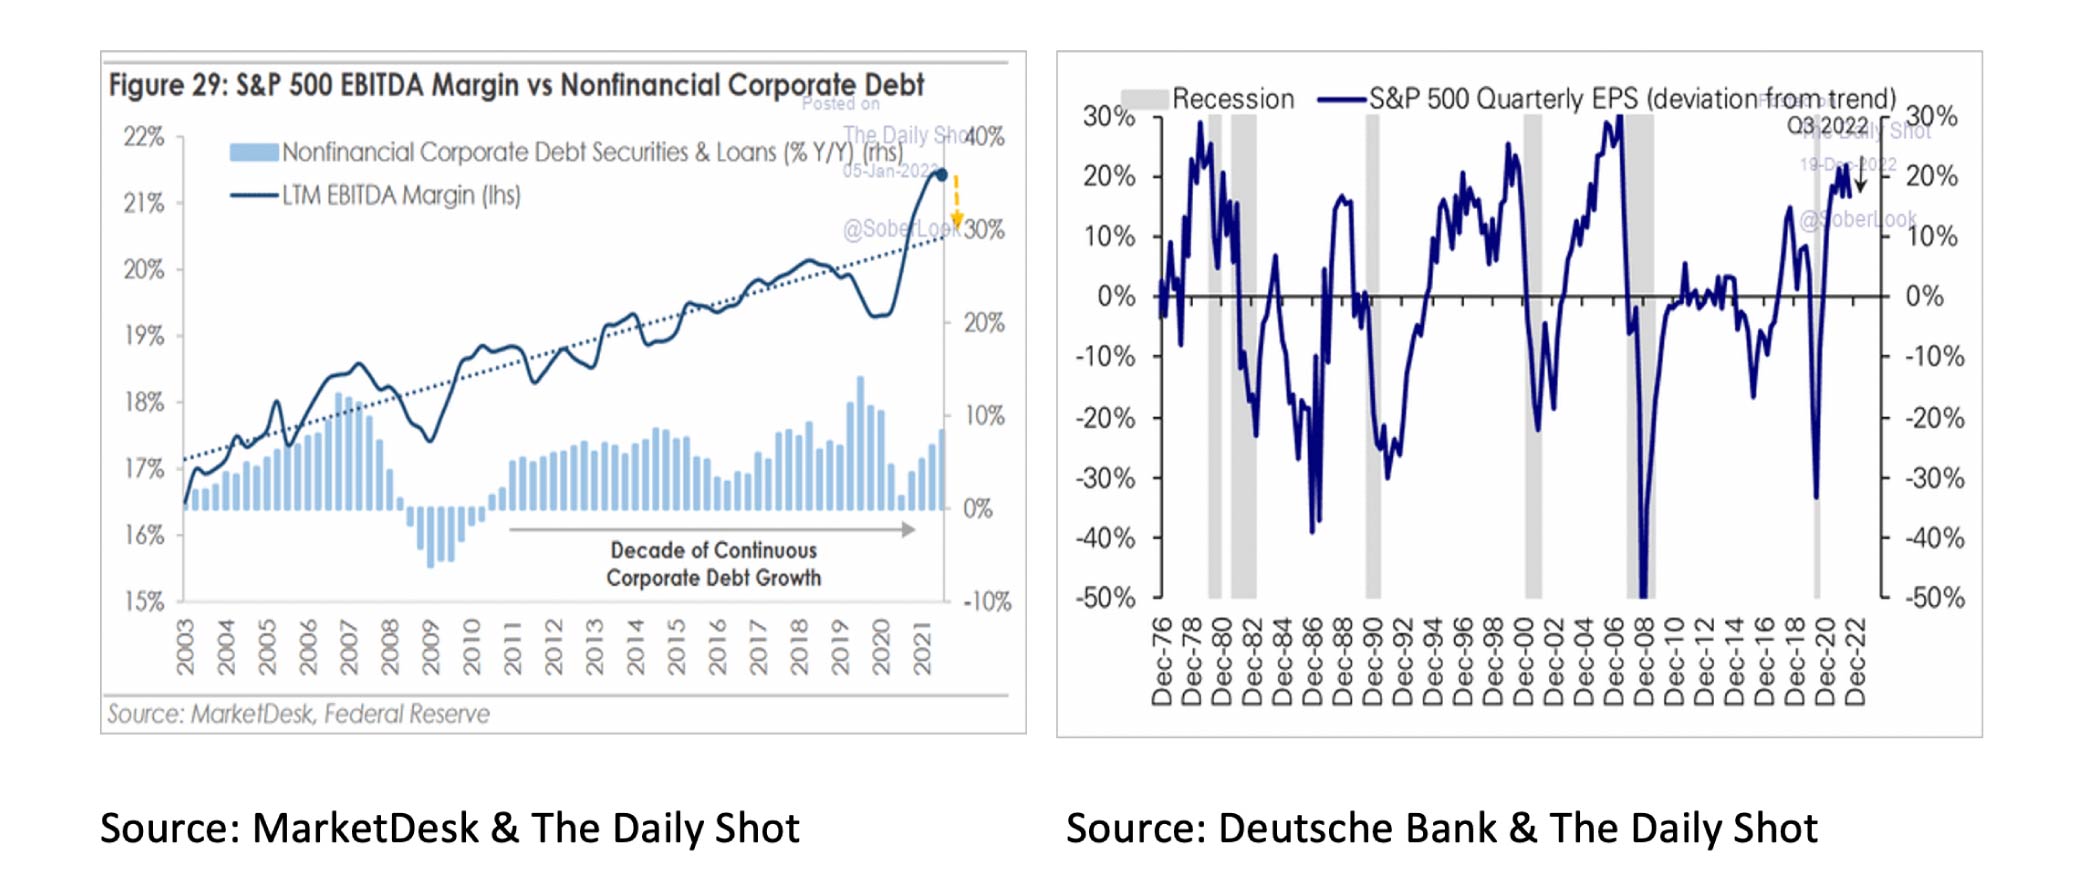 S&P 500 EBITDA Margin vs Nonfinancial corporate debt.